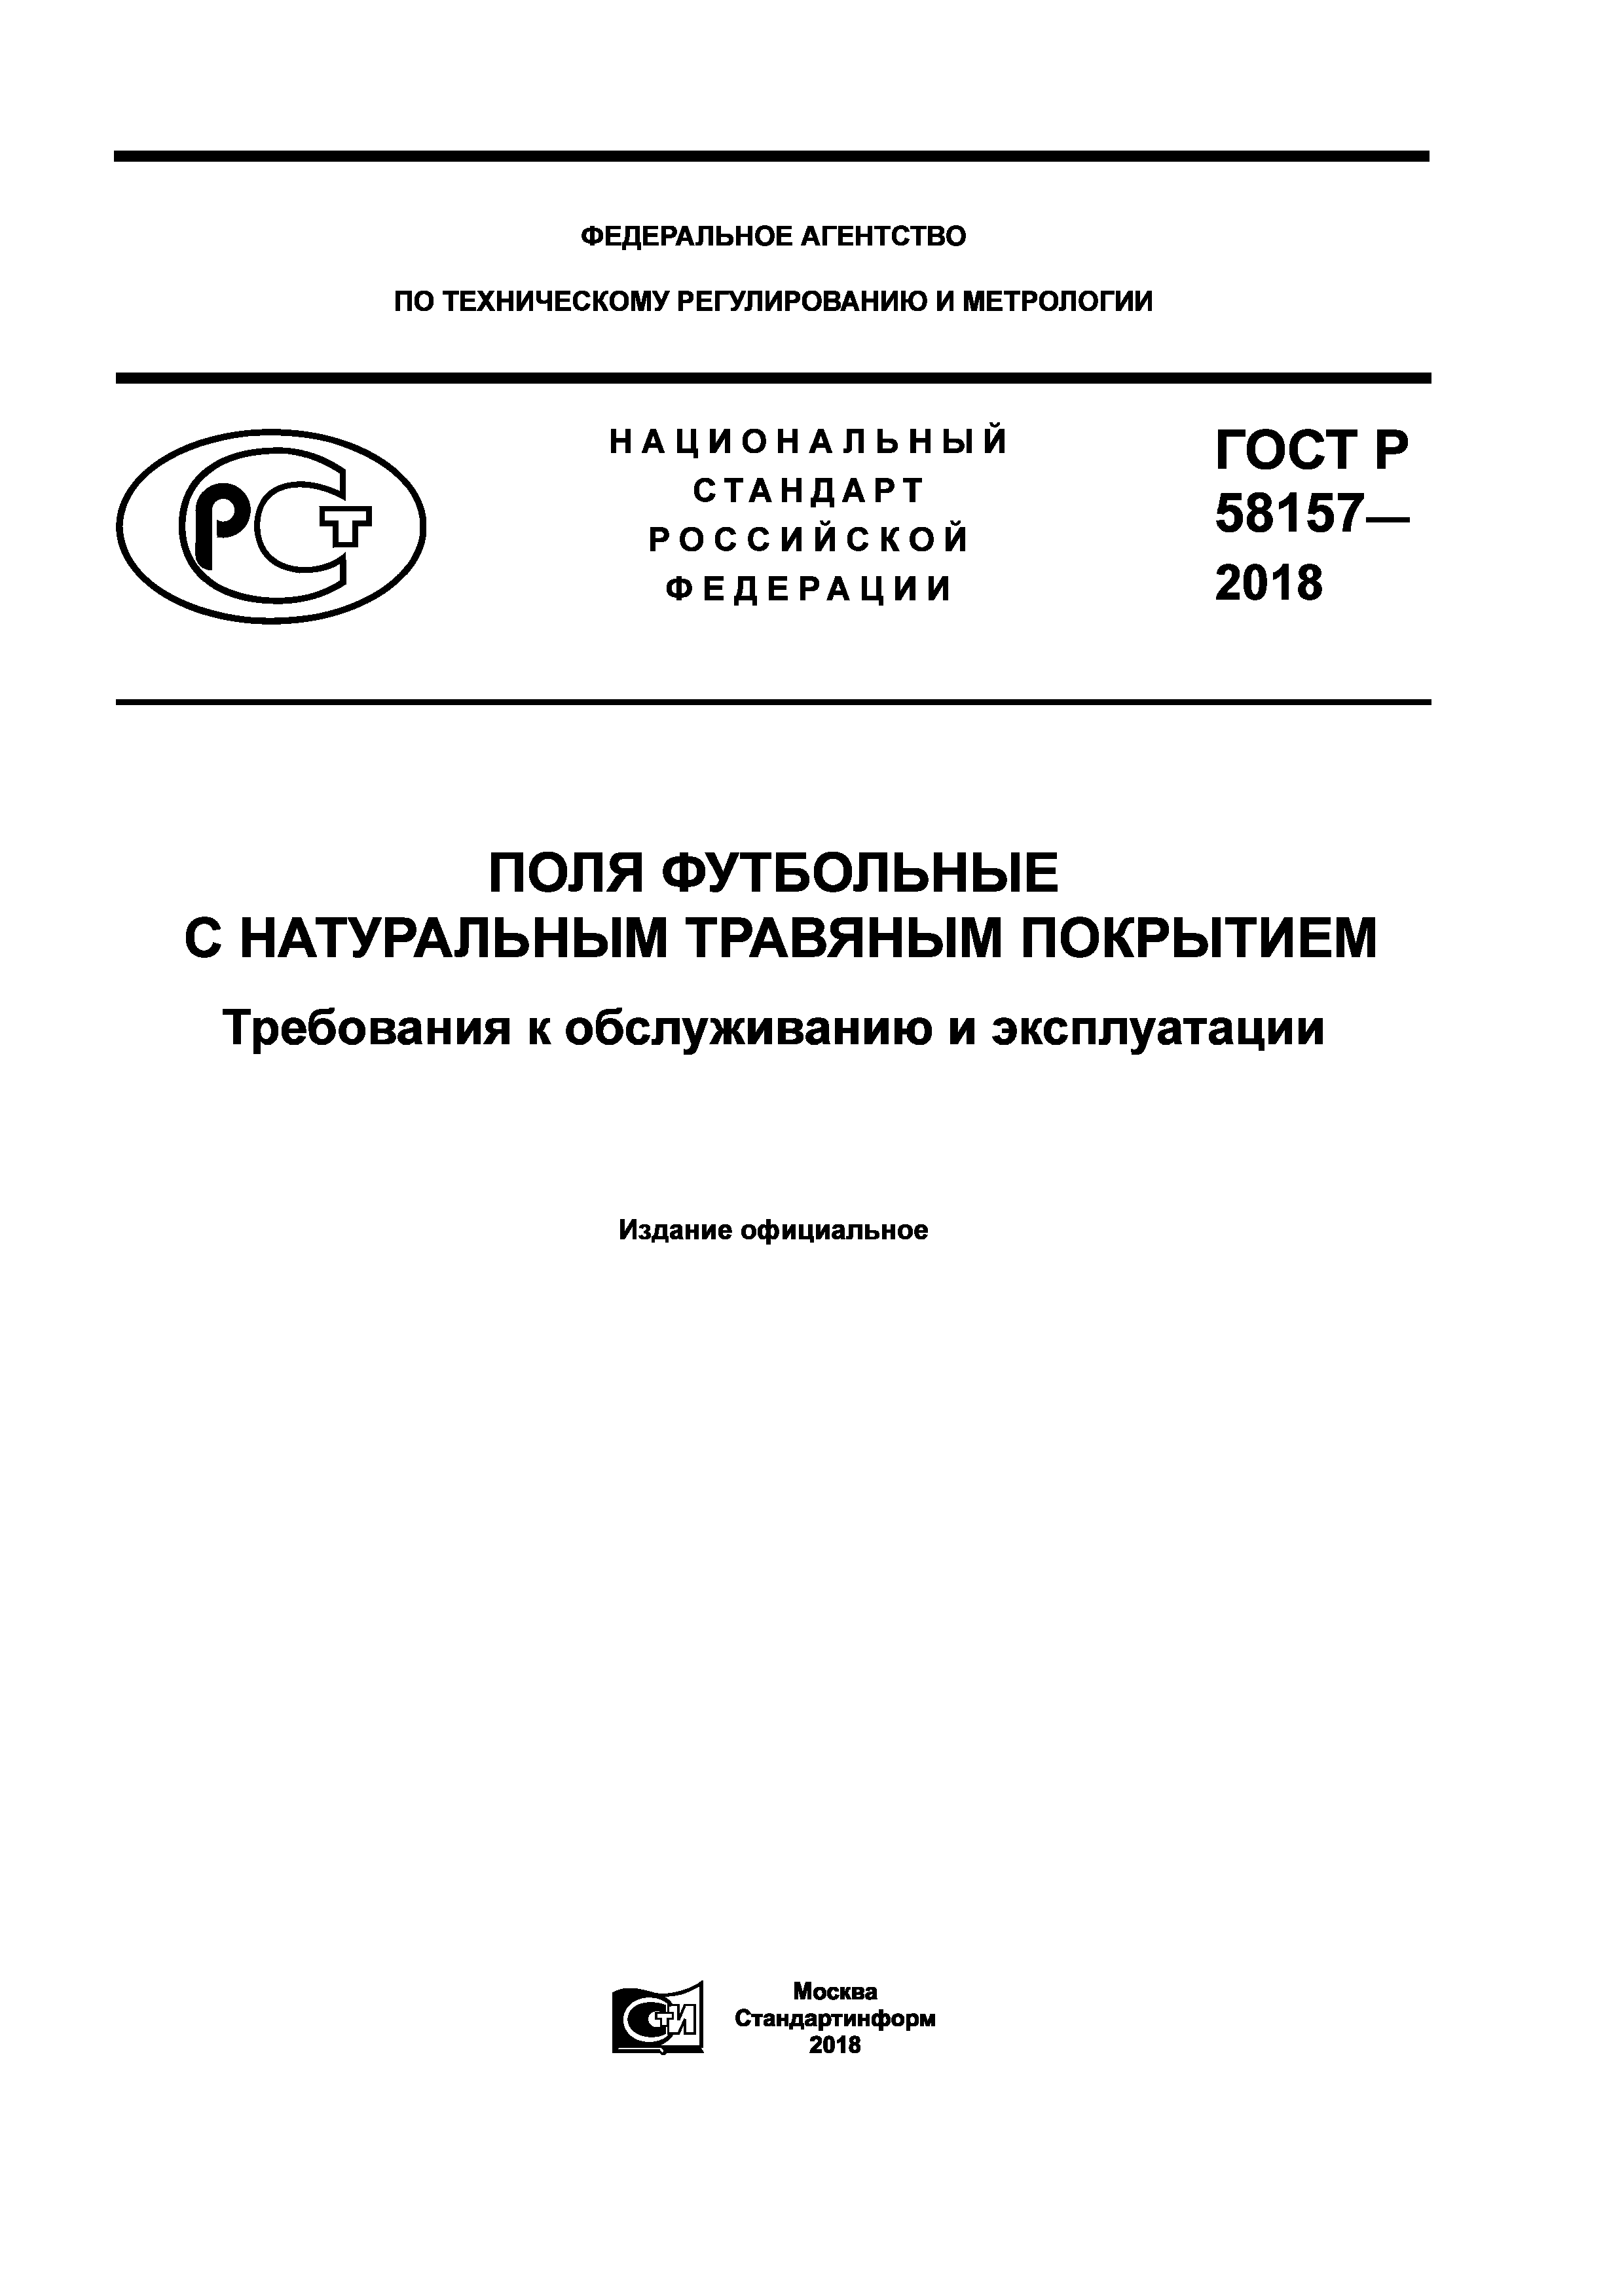 ГОСТ Р 58157-2018